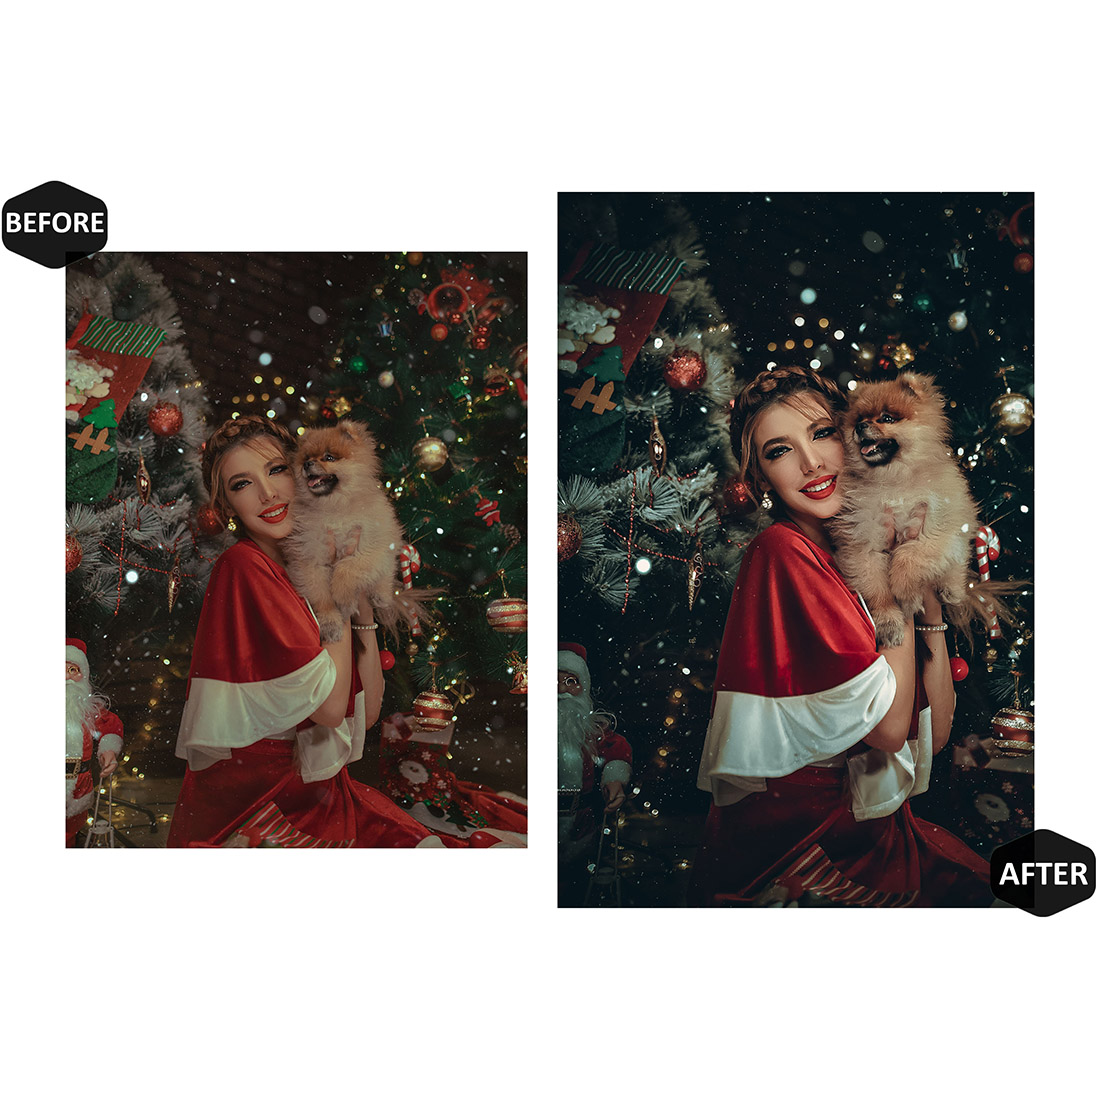 12 Festive Xmas Lightroom Presets, Christmas Mobile Preset, Moody Holiday Desktop LR Filter Scheme Lifestyle Theme For Portrait, Instagram preview image.